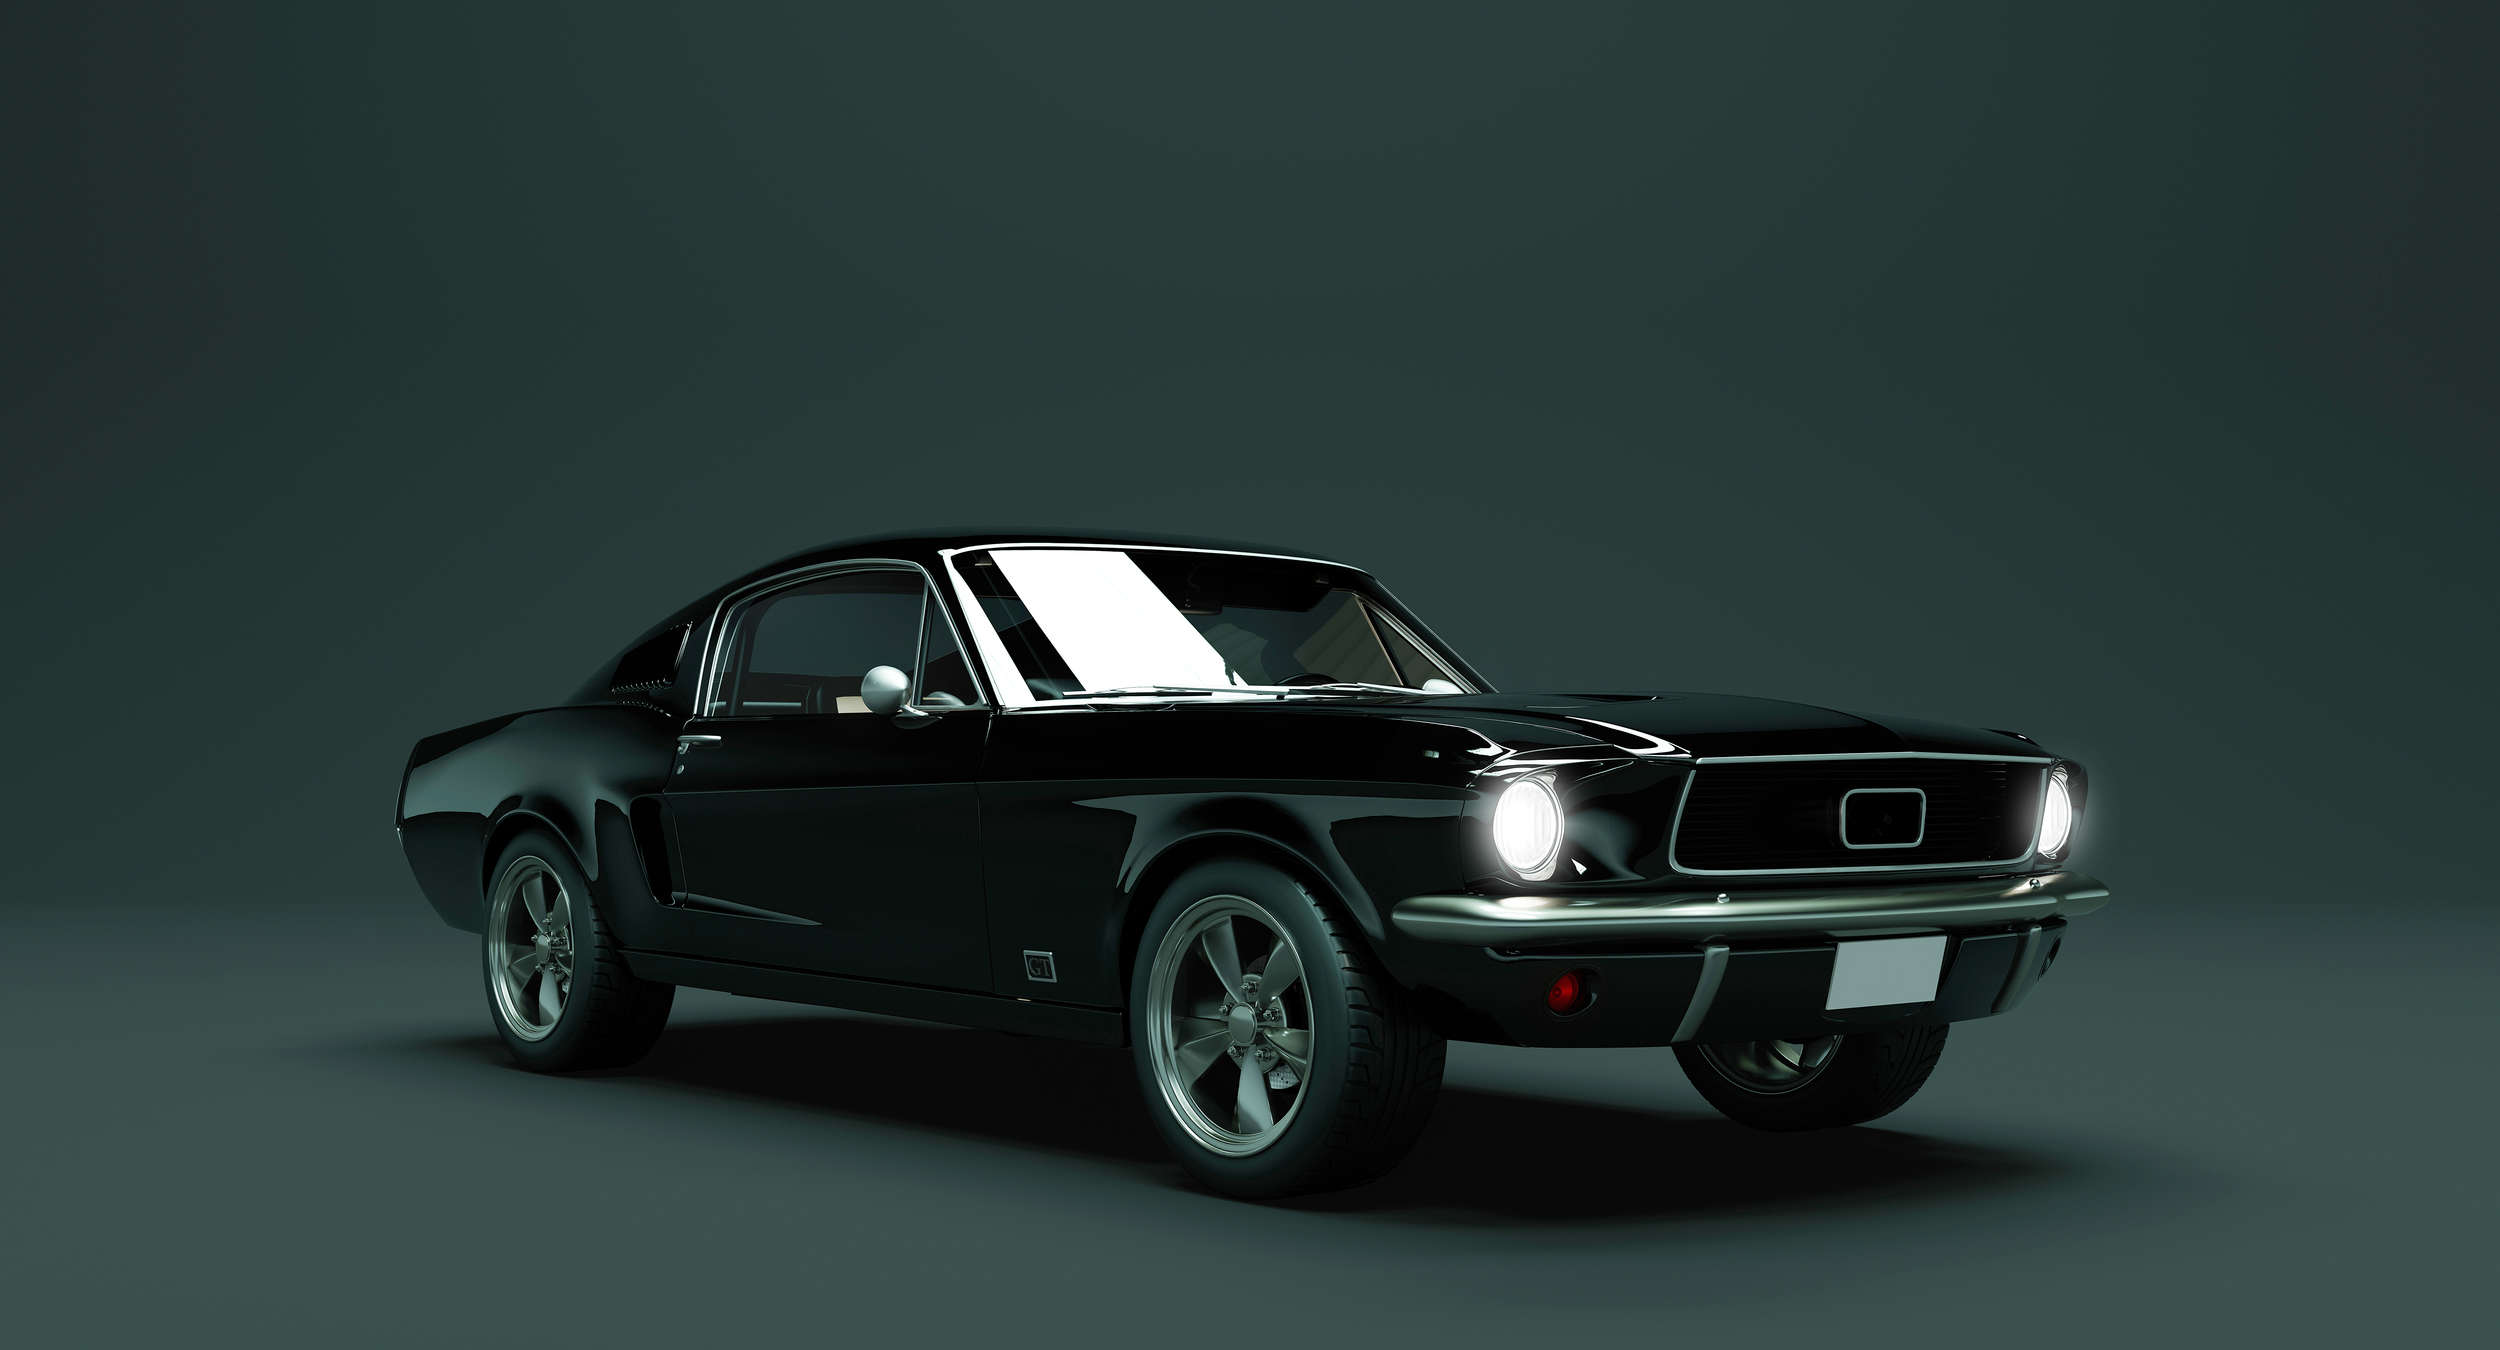             Mustang 2 - Fotomurali, auto d'epoca Mustang 1968 - Blu, nero | Pile liscio opaco
        